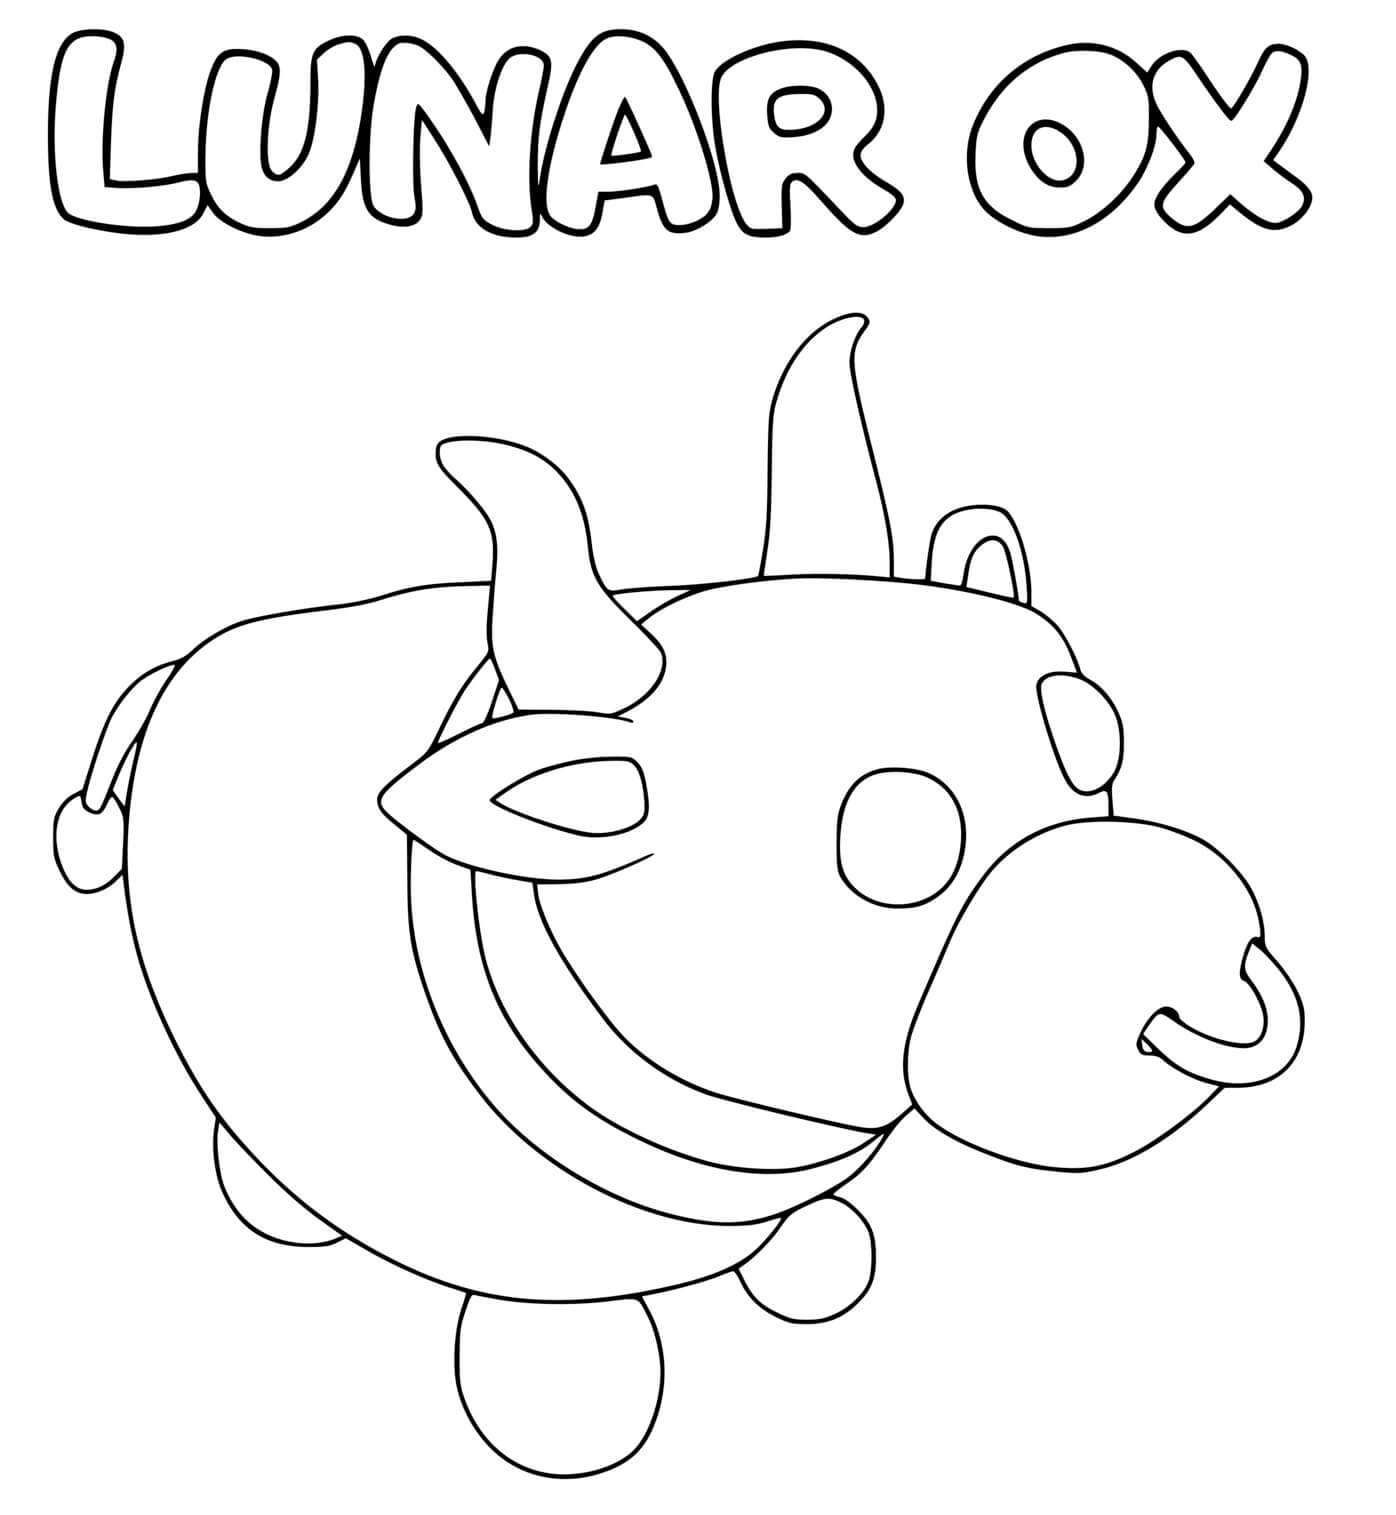 Adopt Me Lunar Ox